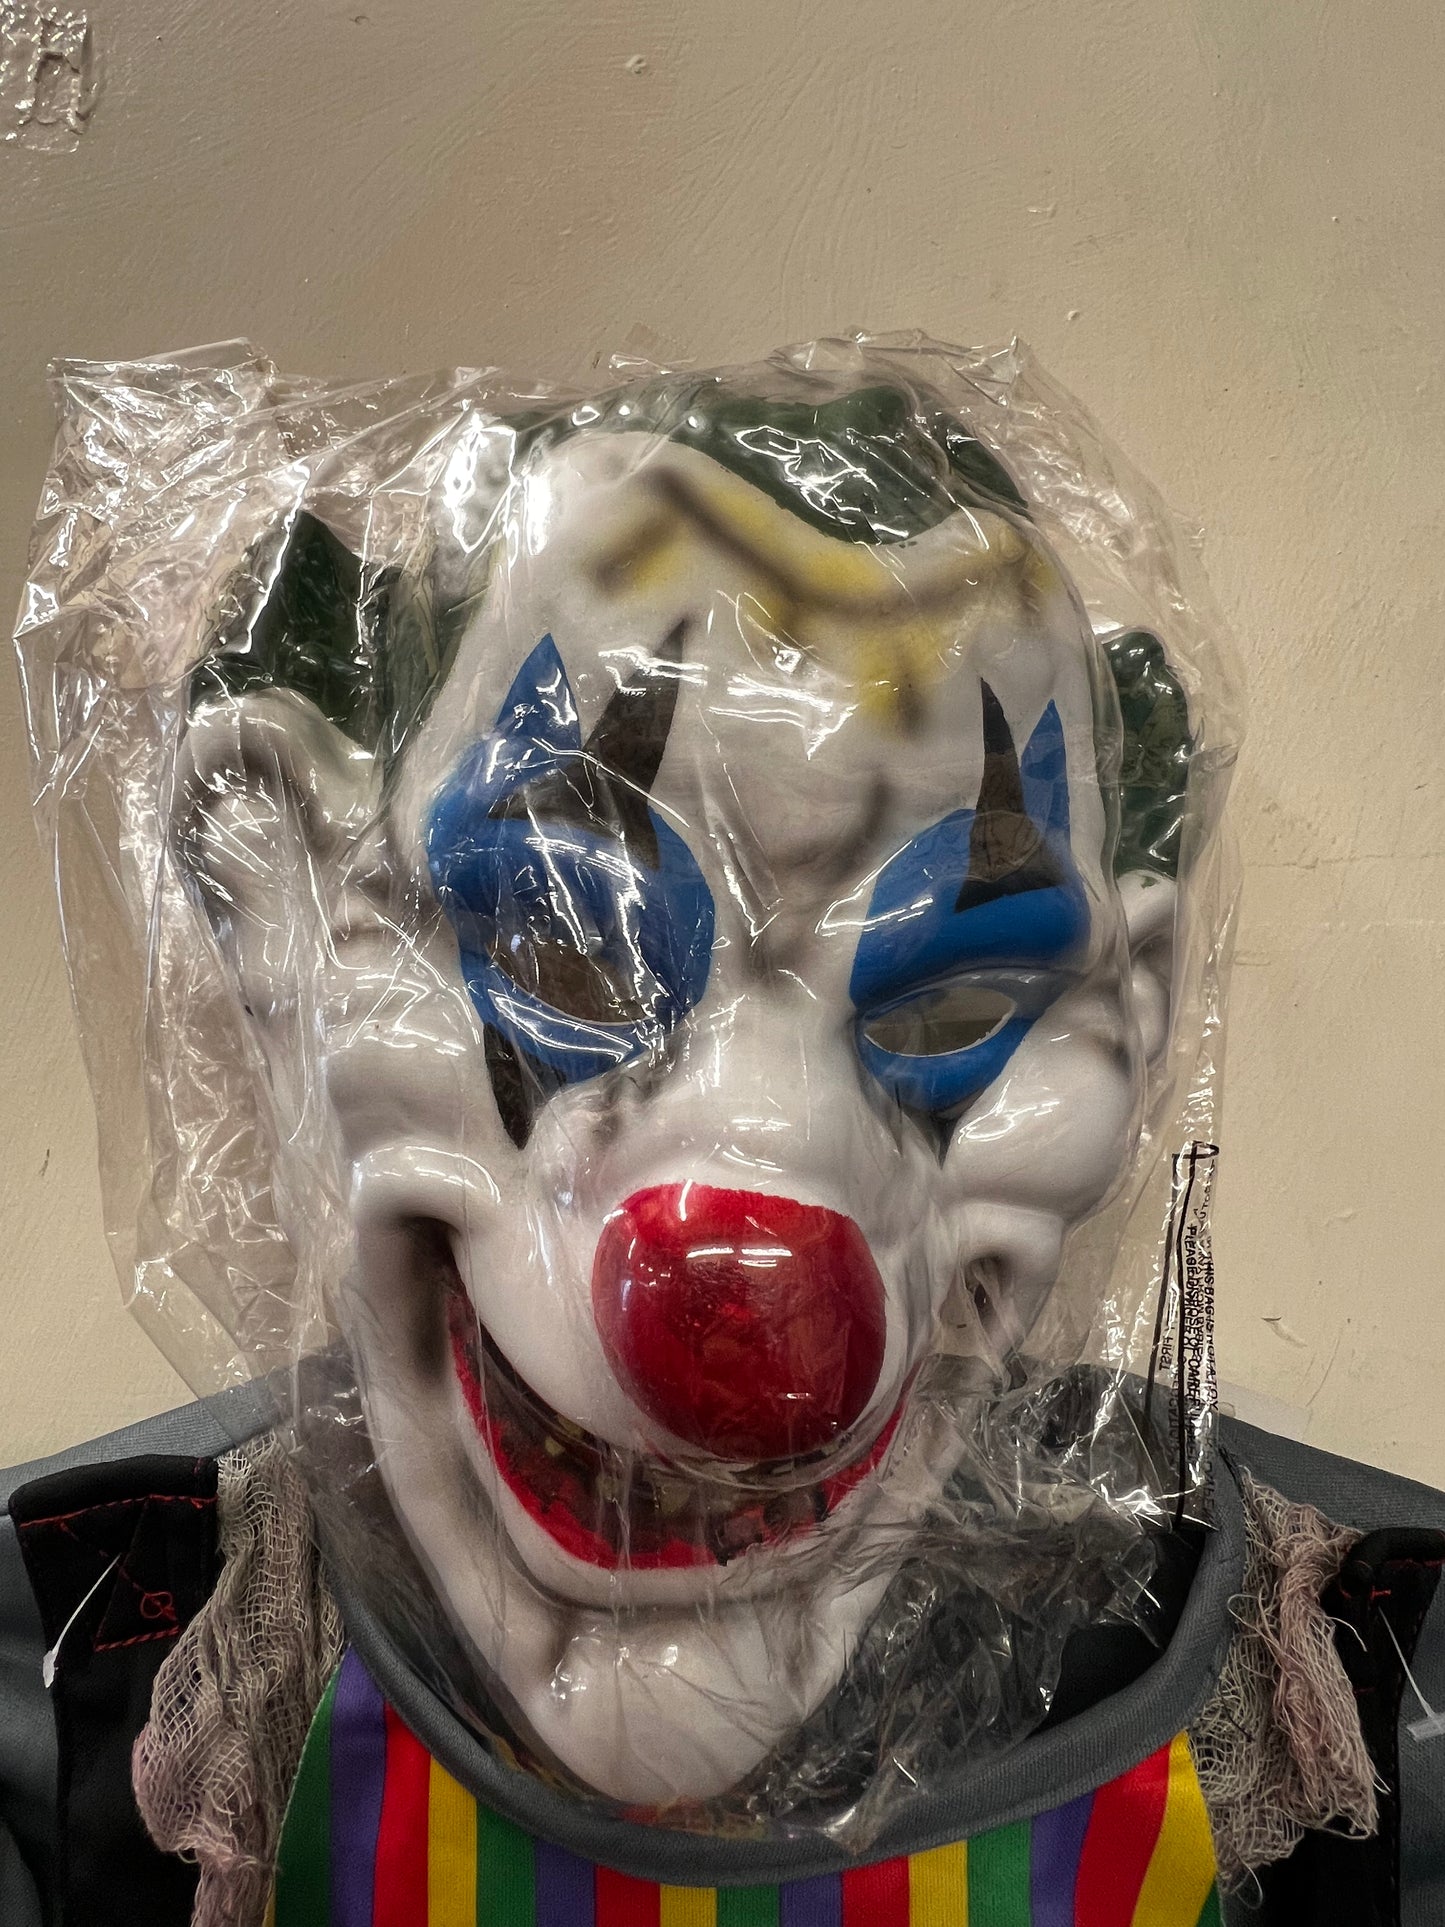 Joker clown costume